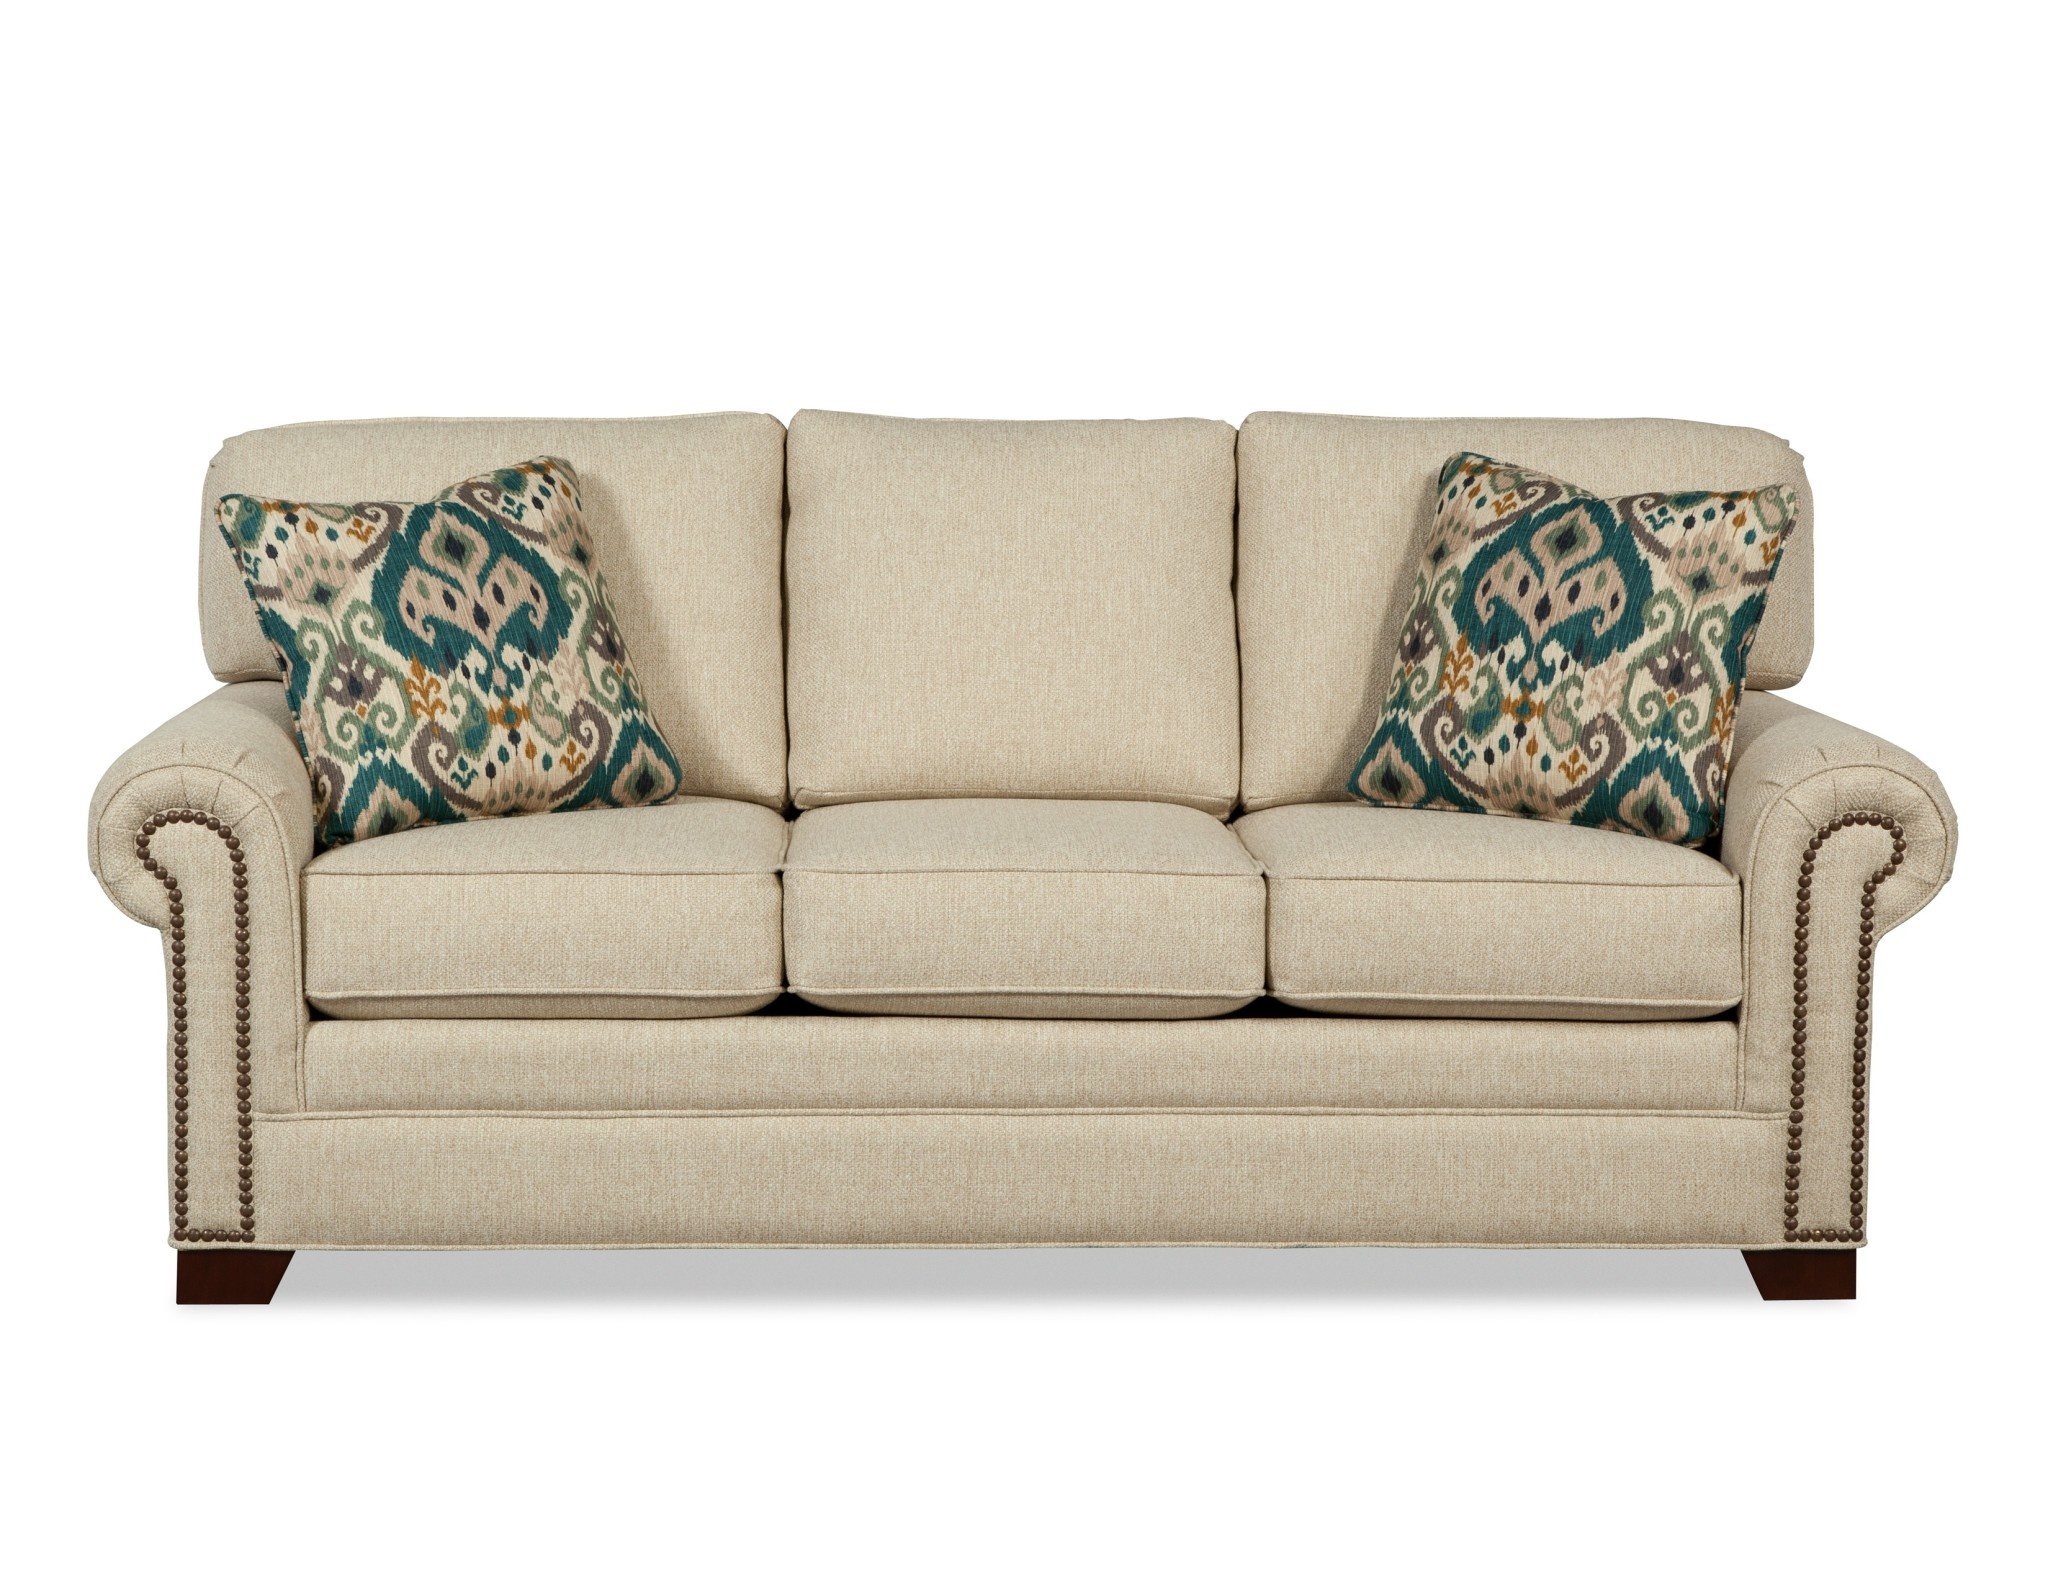 Craftmaster Furniture 7565 Sofa